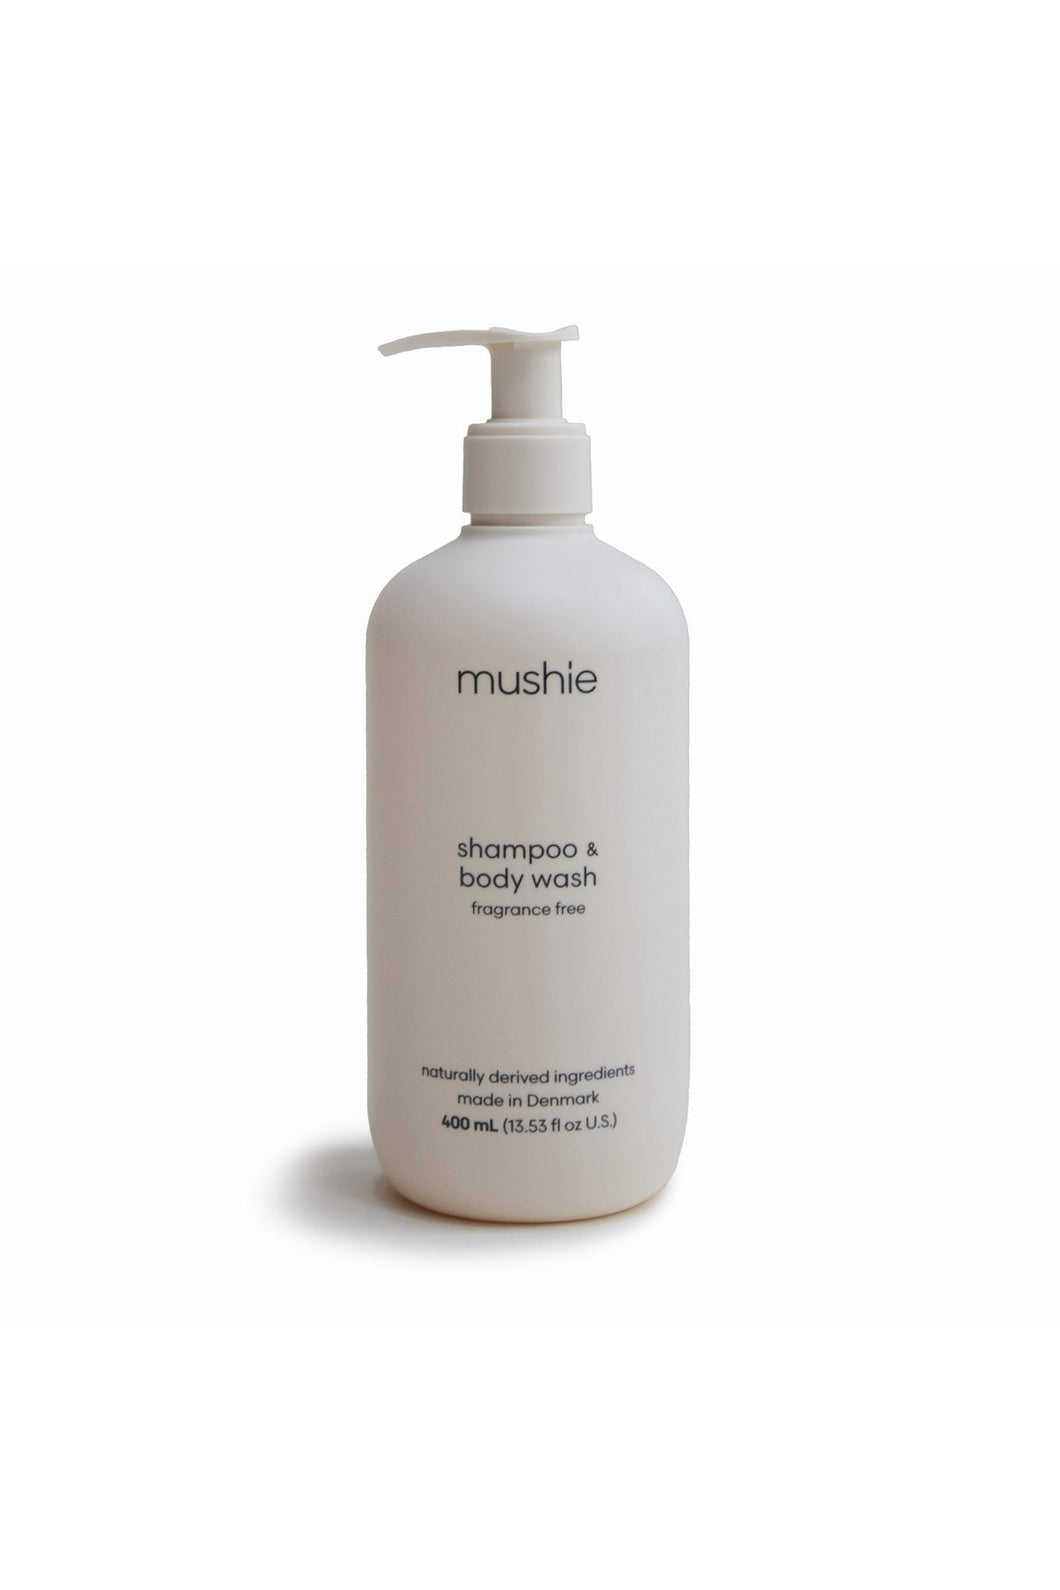 Mushie Baby Shampoo & Body Wash 400 ml - Fragrance Free 1